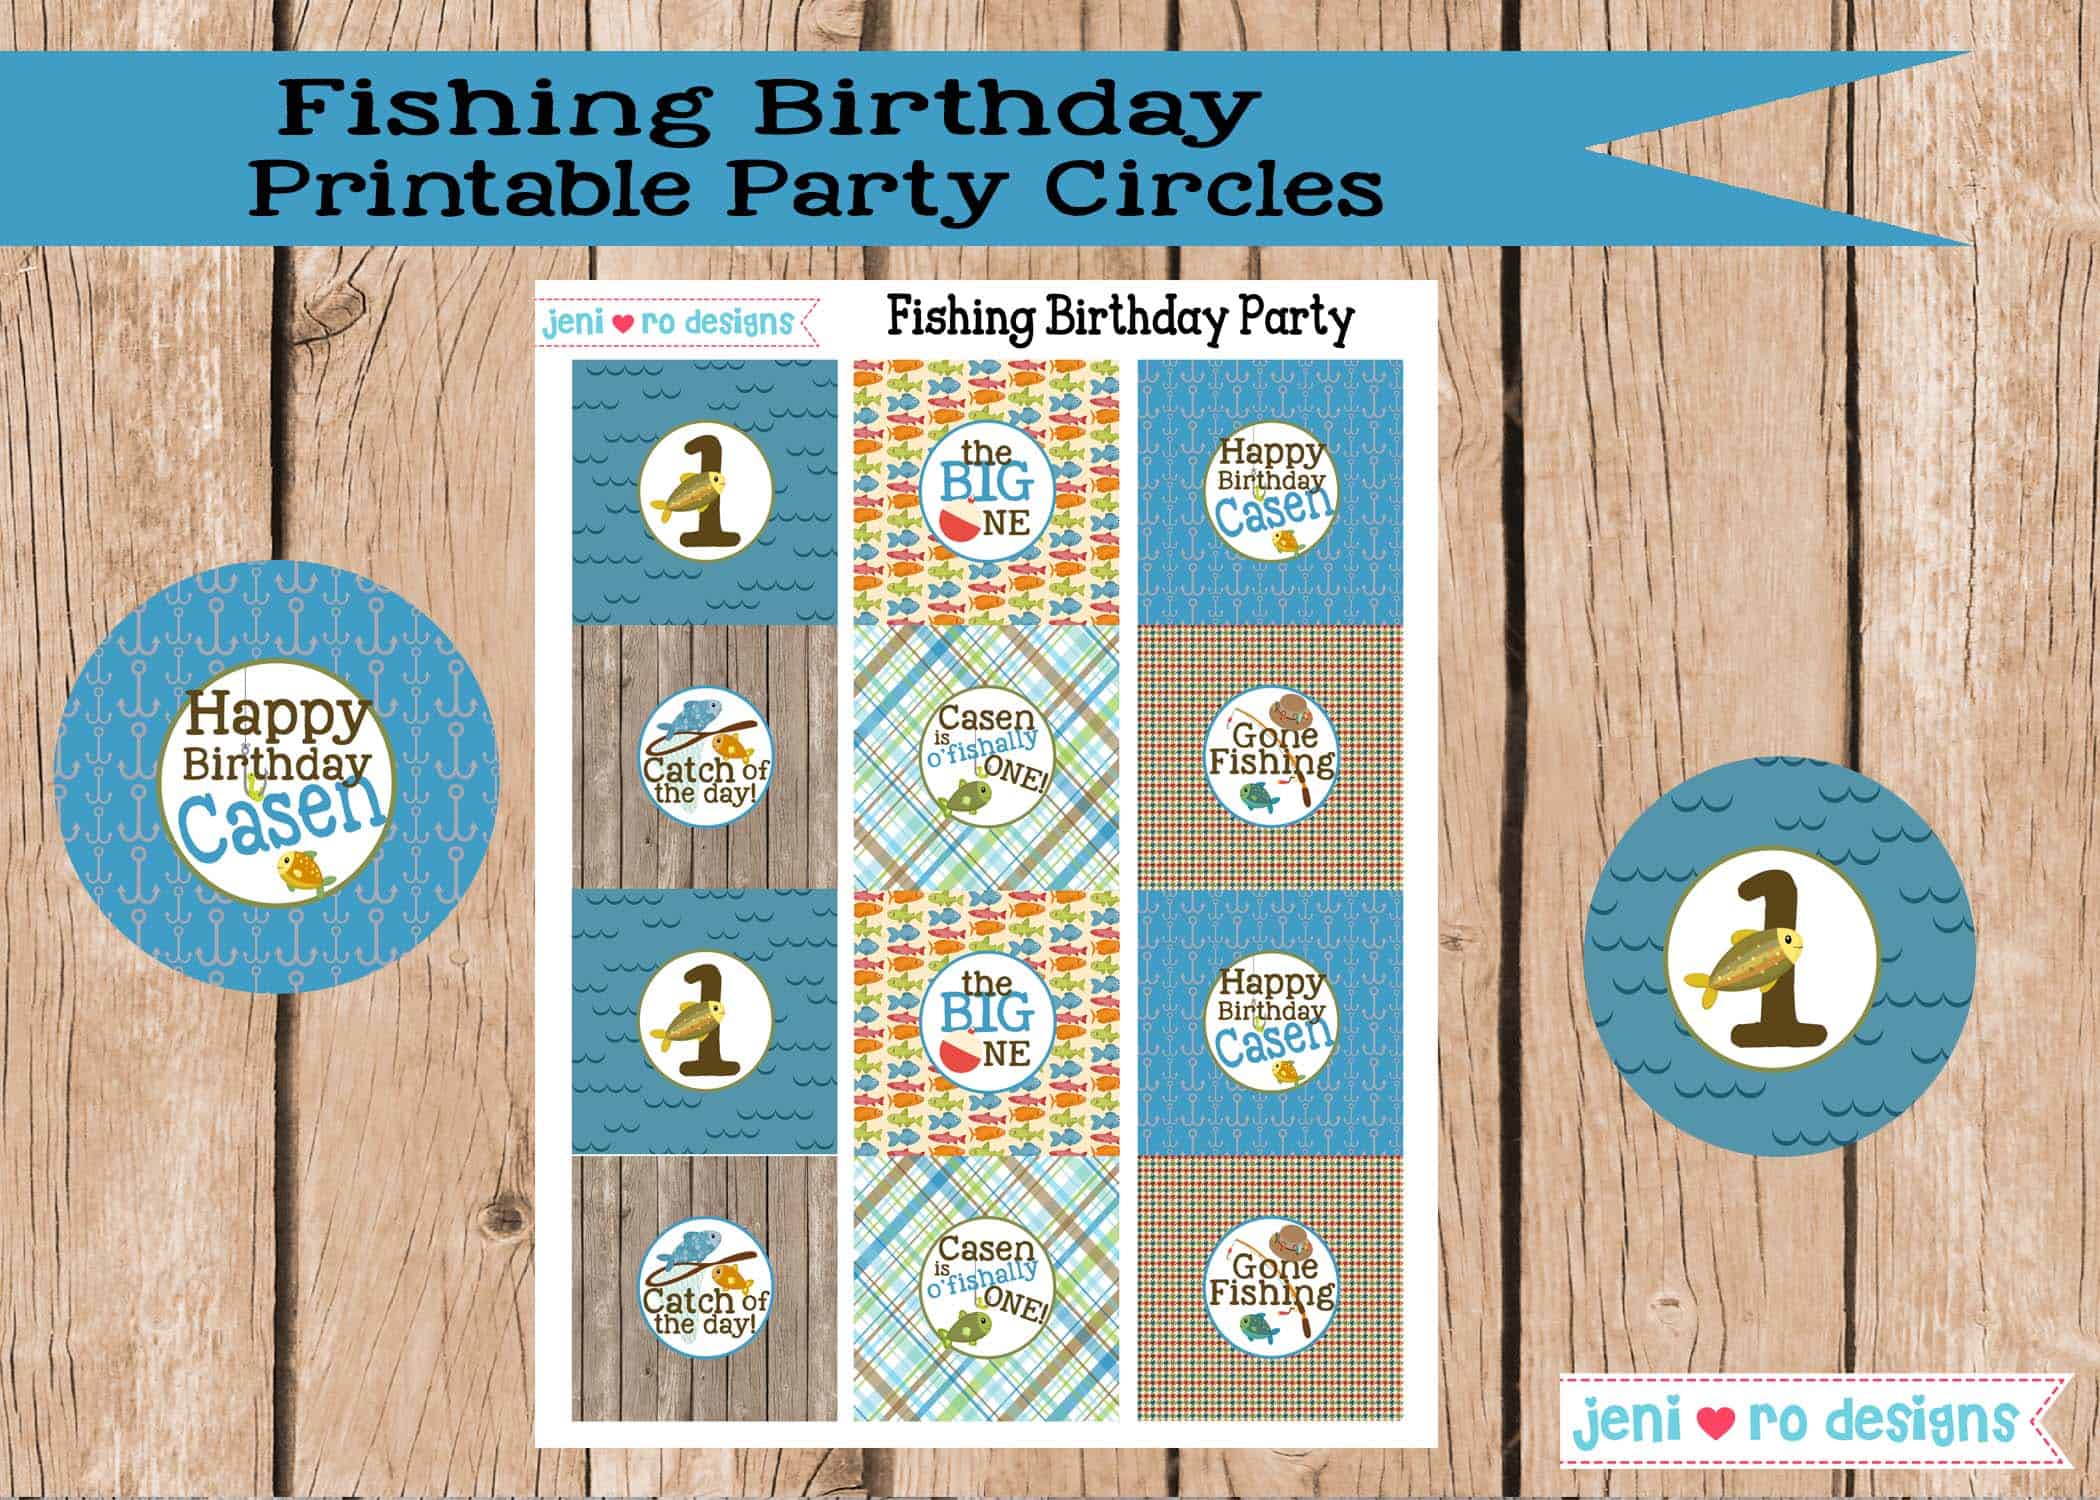 Fishing Birthday Party Printable Decor set - Fishing birthday - The Big One  - 1st Birthday - Fishing birthday printable decor • jeni ro designs